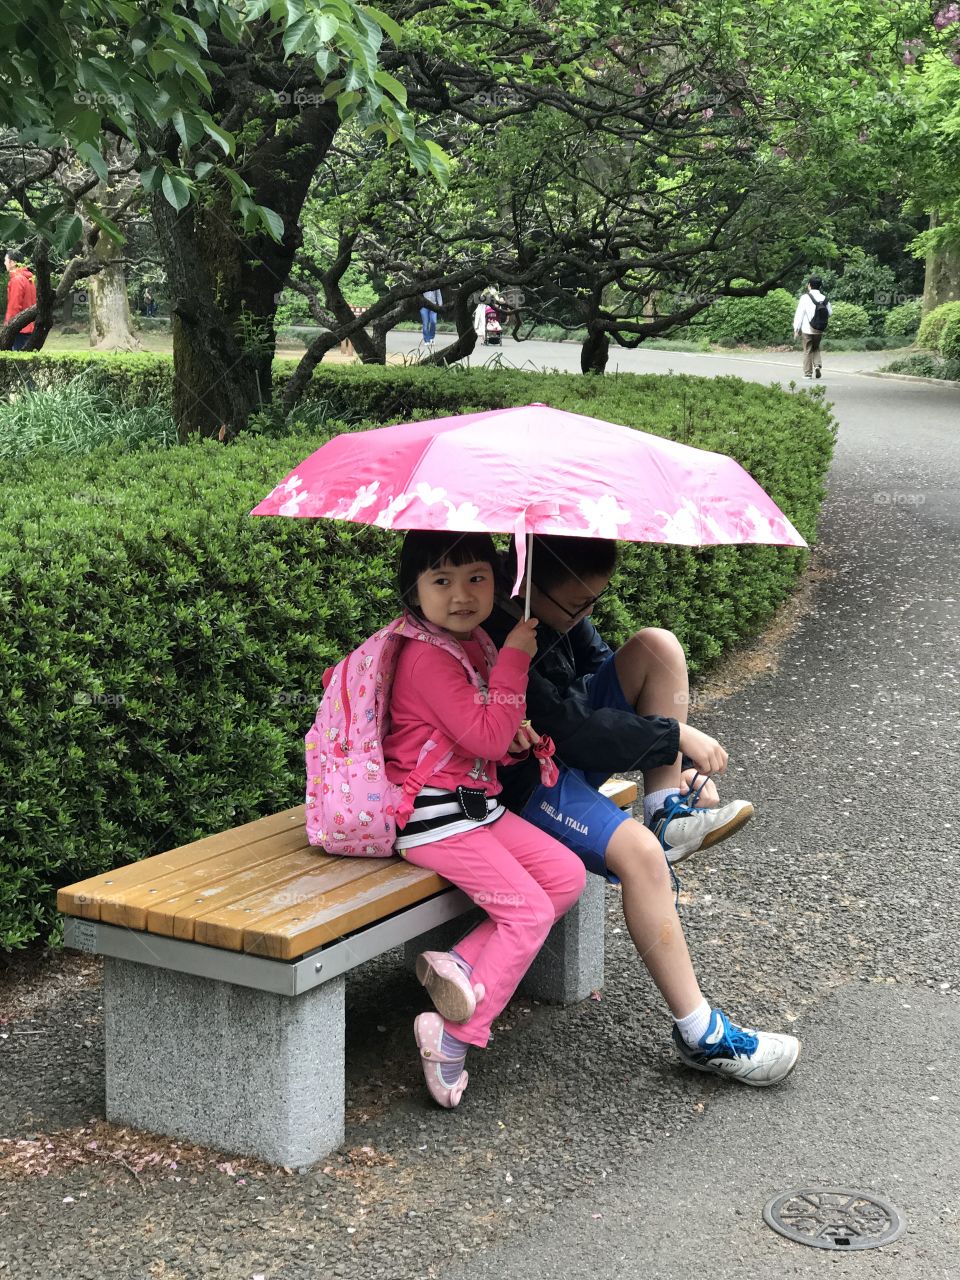 Shinjuku-Gyoen Park on a rainy day portrayed by kids sharing umbrellas